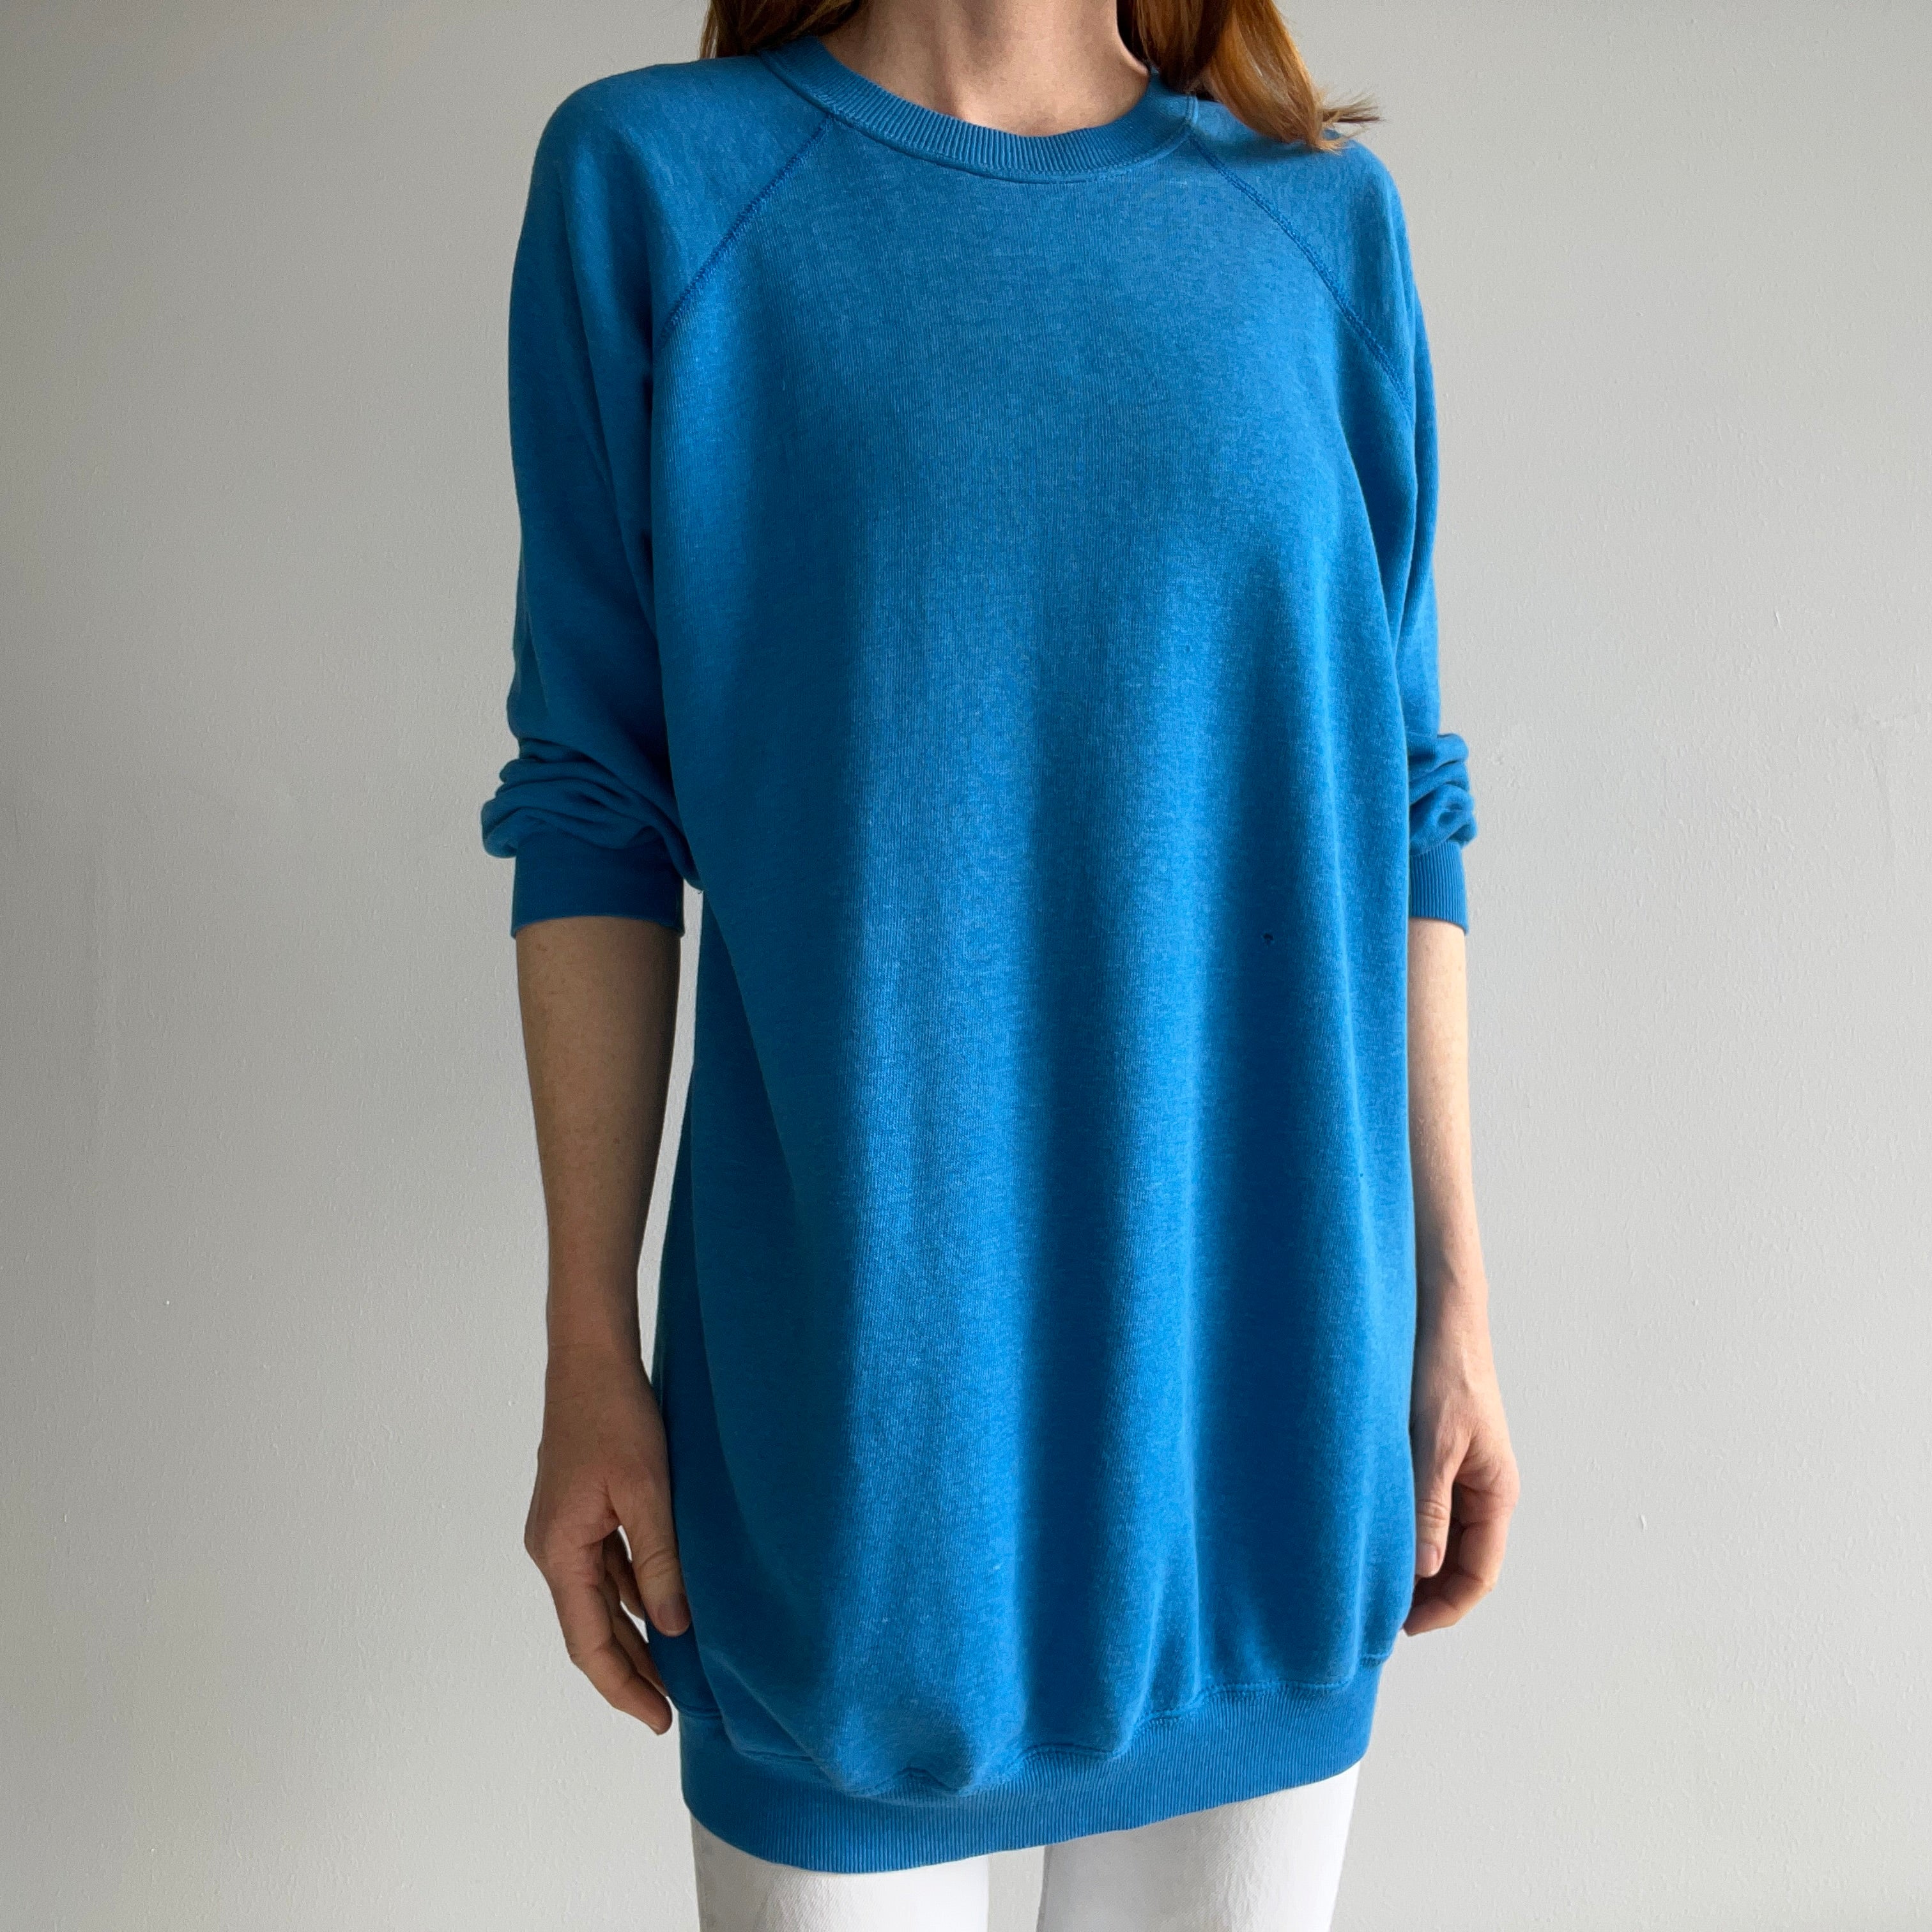 1980s Blank Blue Super Soft Sweatshirt Dress